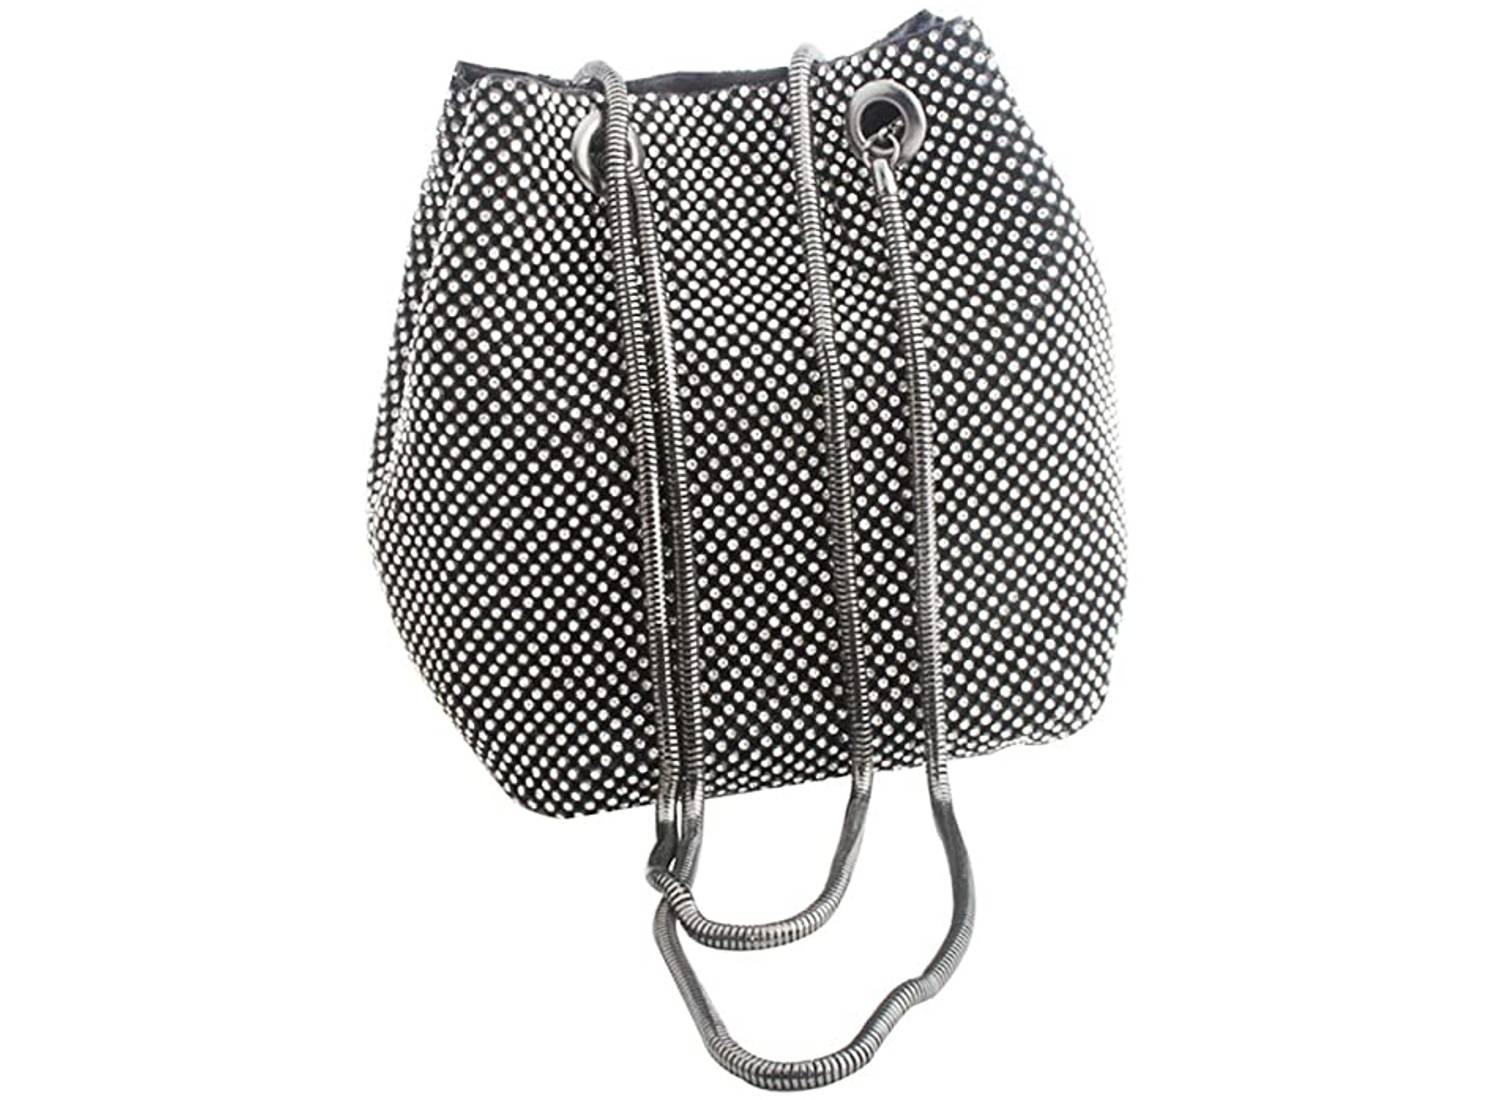 Small black and silver rhinestone-embellished purse